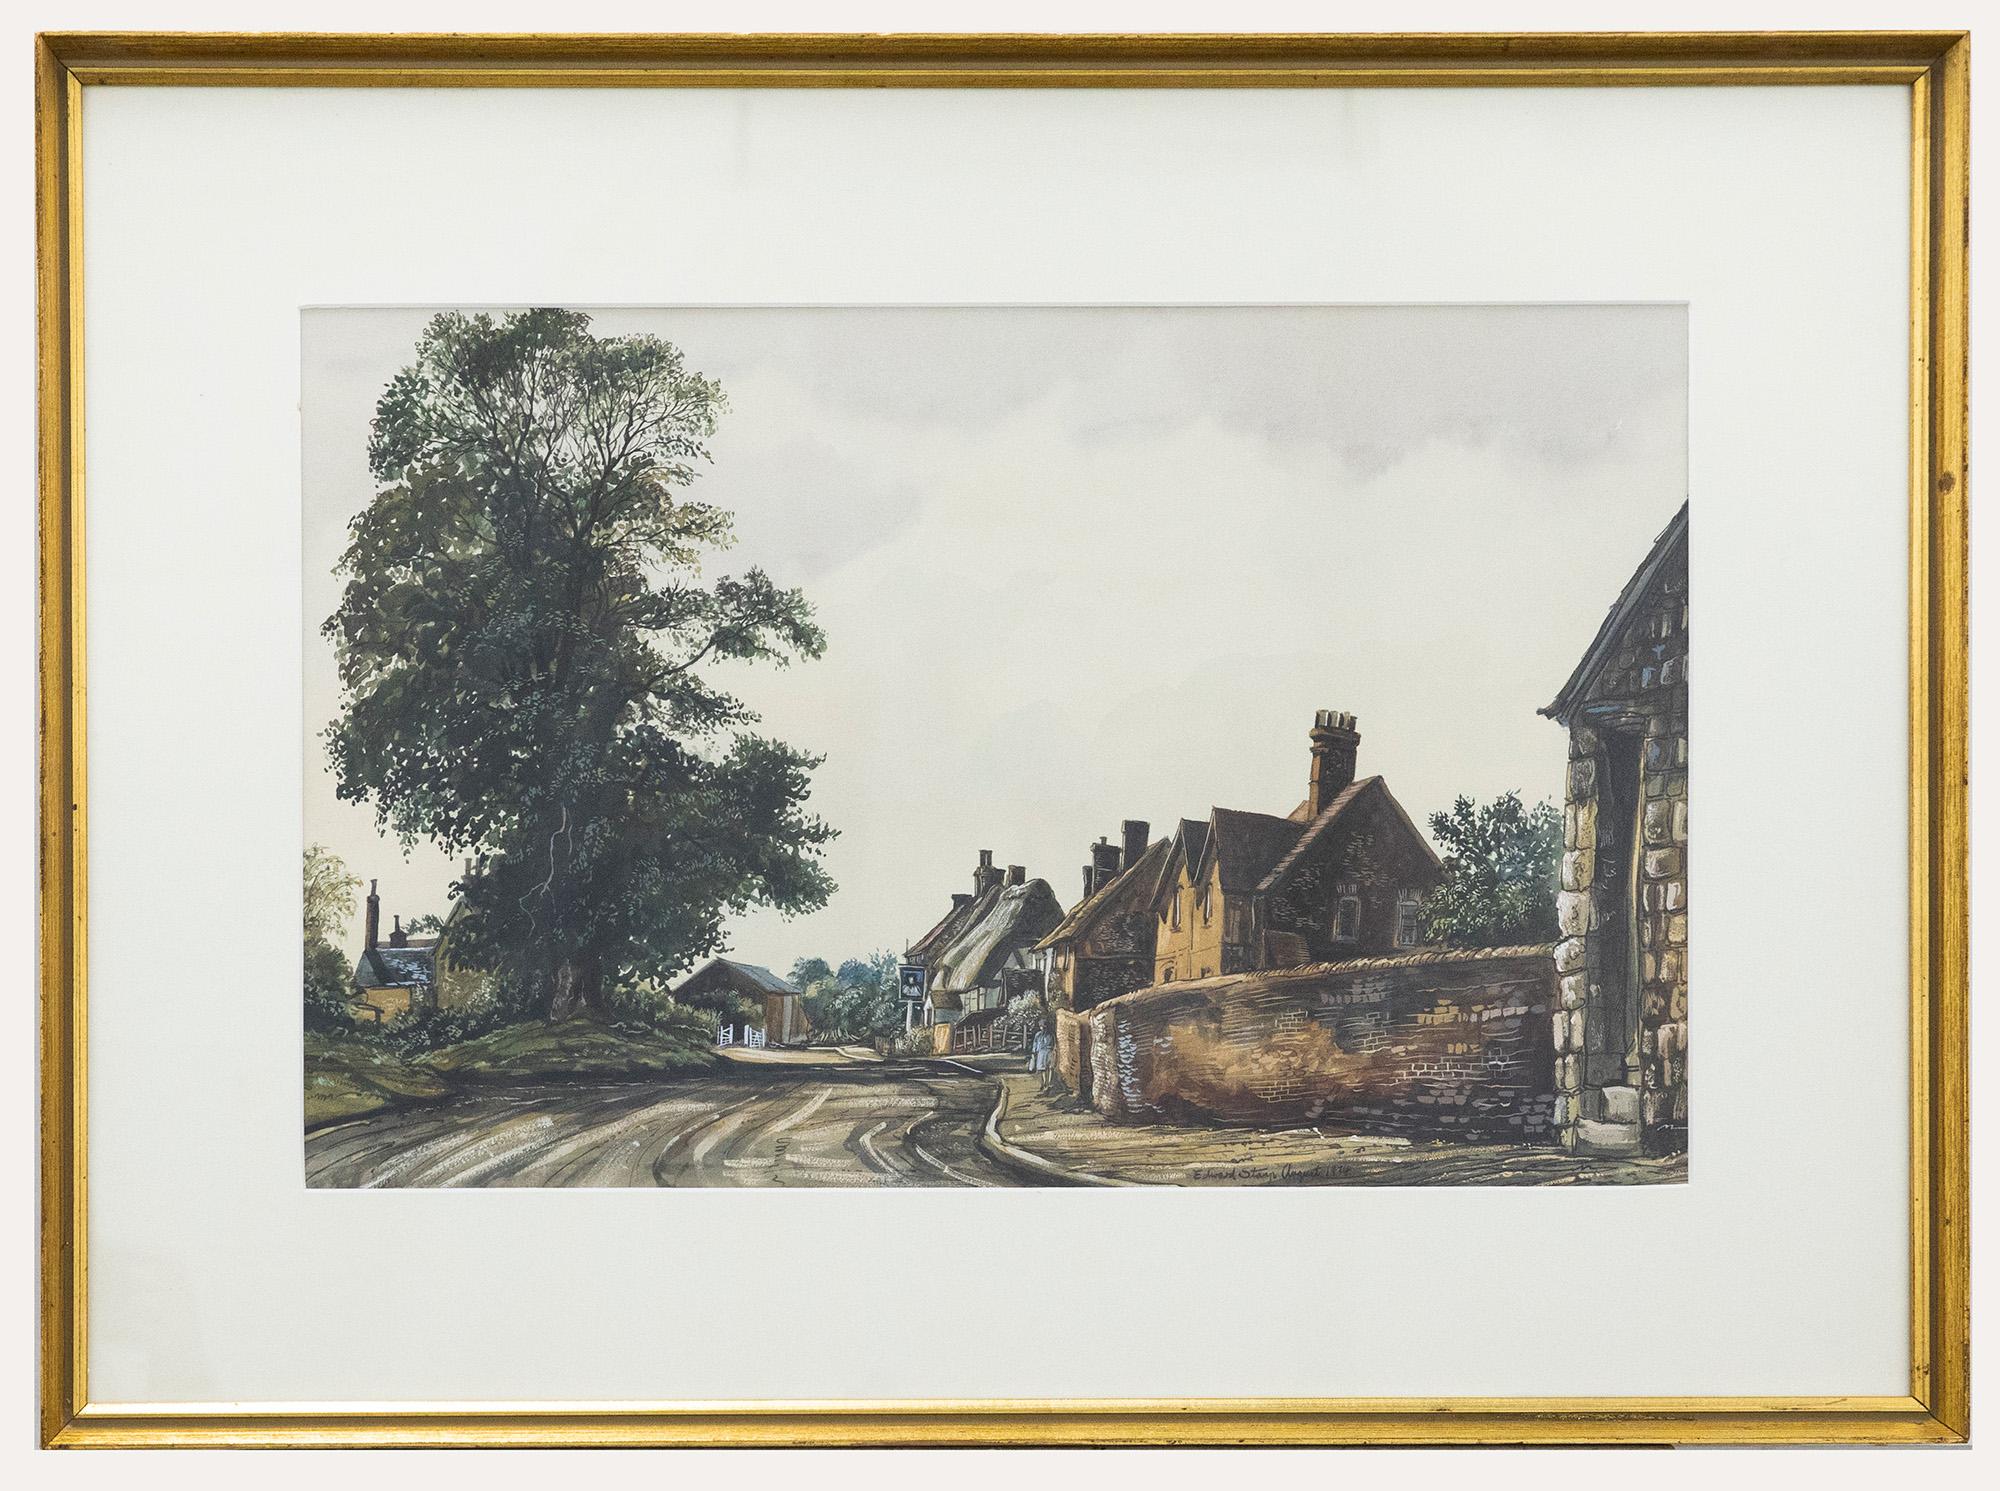 Unknown Landscape Art - Edward Stamp (b.1939) - Framed 1974 Watercolour, Rural Street Scene